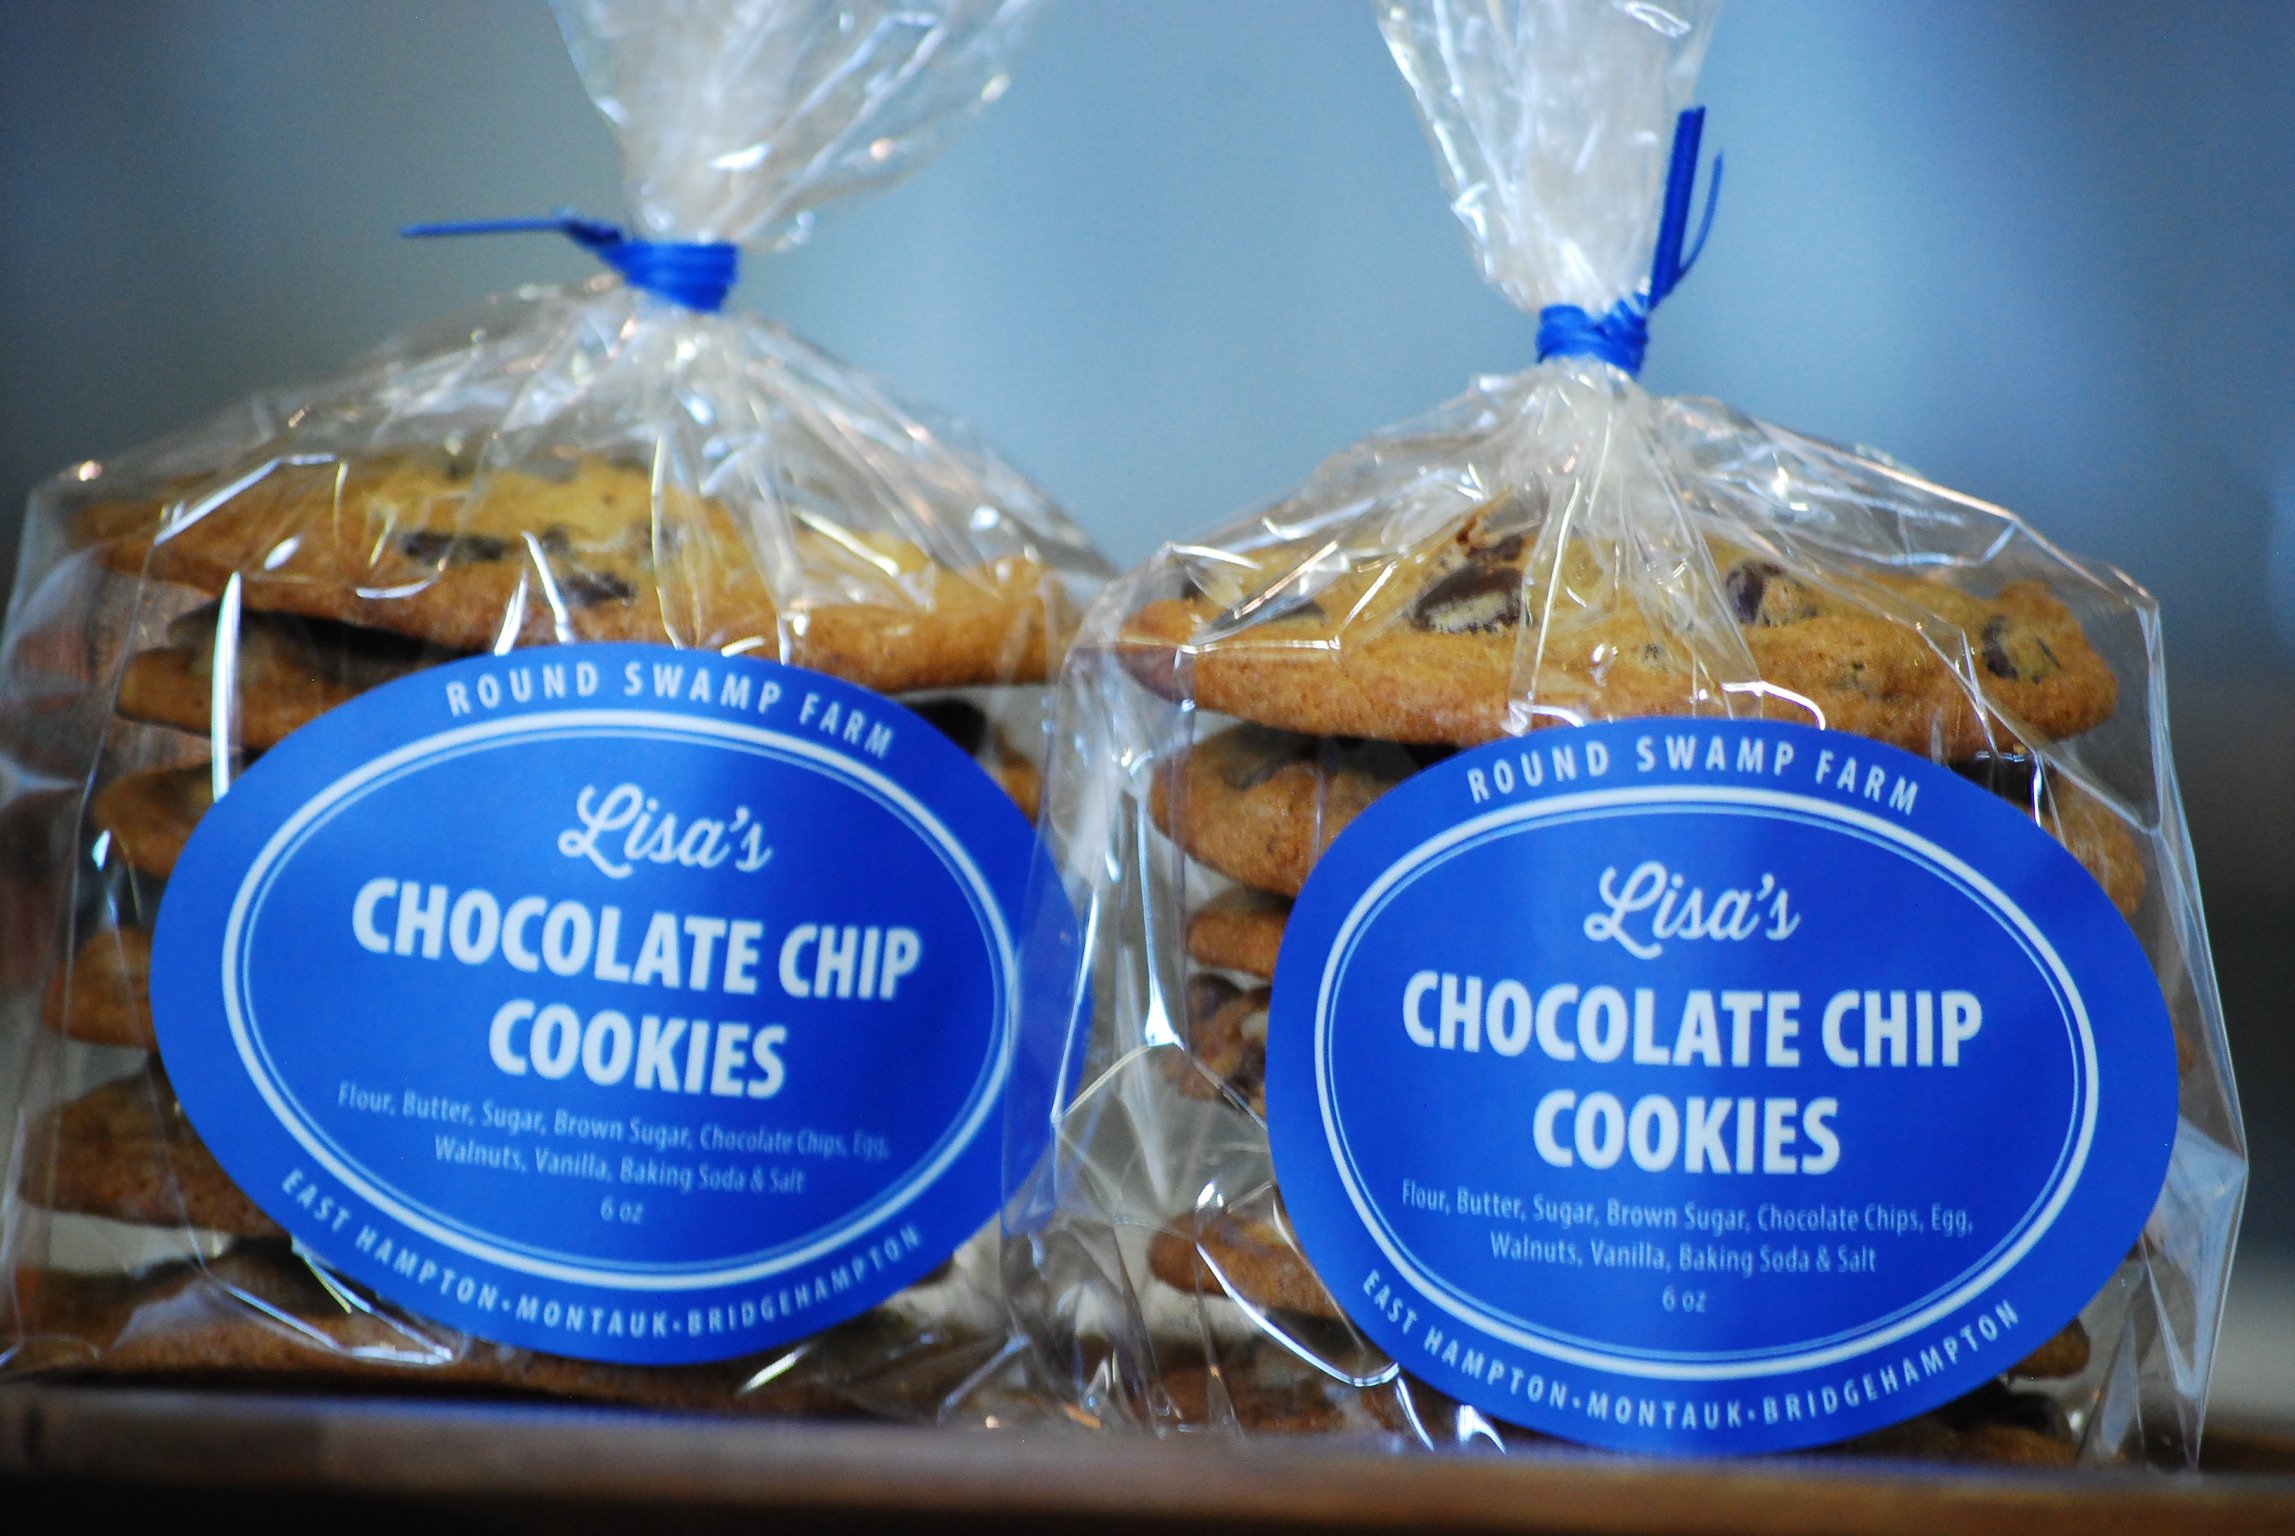 Lisa's Chocolate Chip Cookies